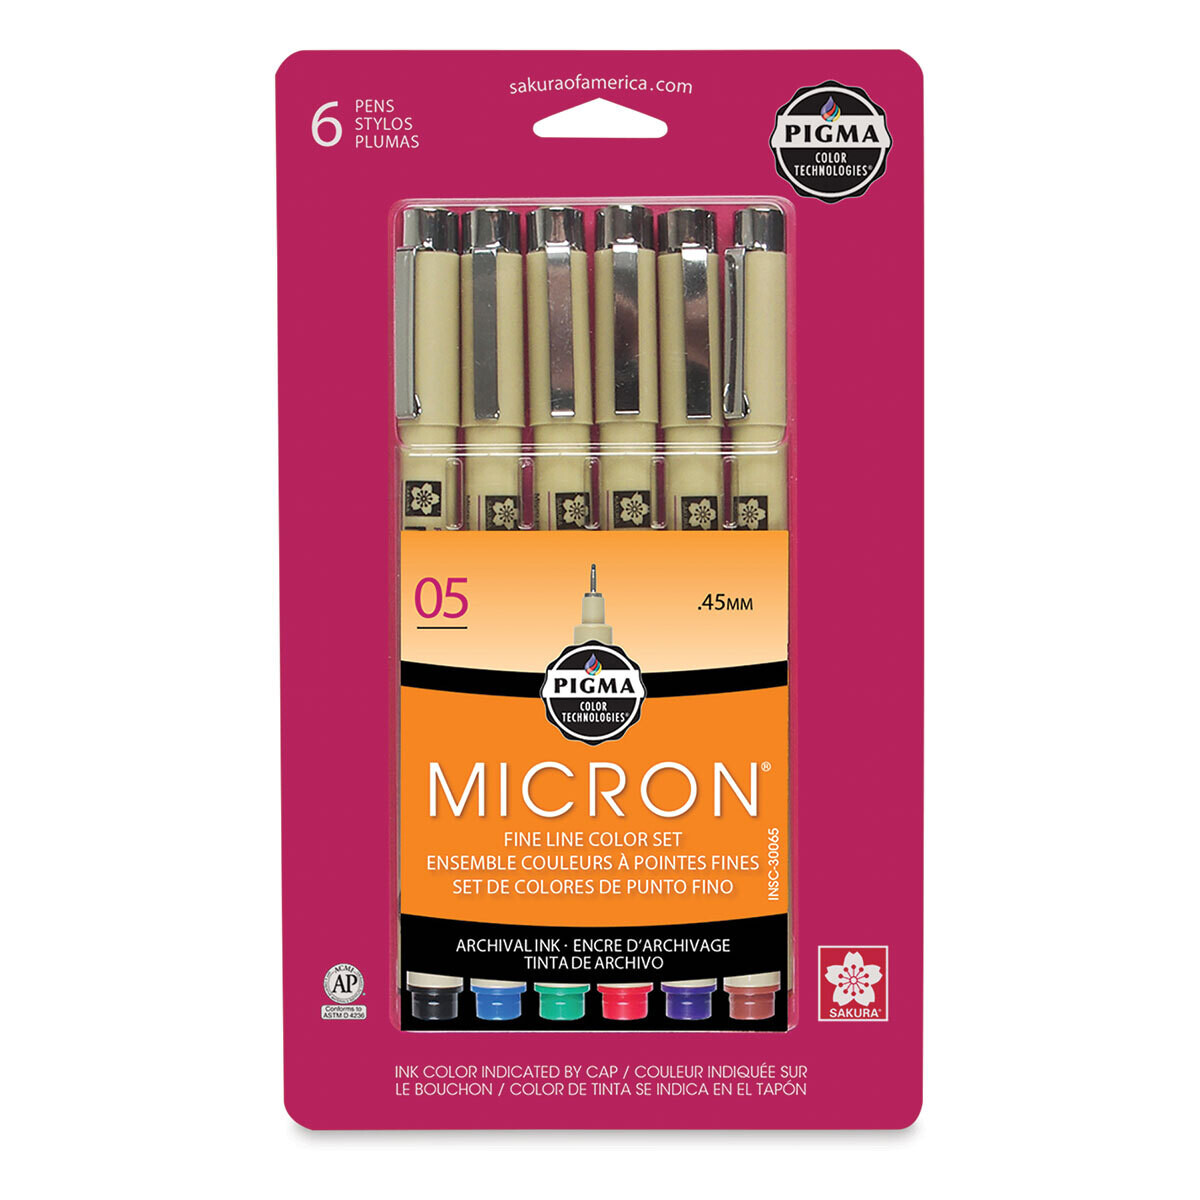 Sakura 30065 Pigma Micron Pens - Set of 6, Assorted Colors, 05